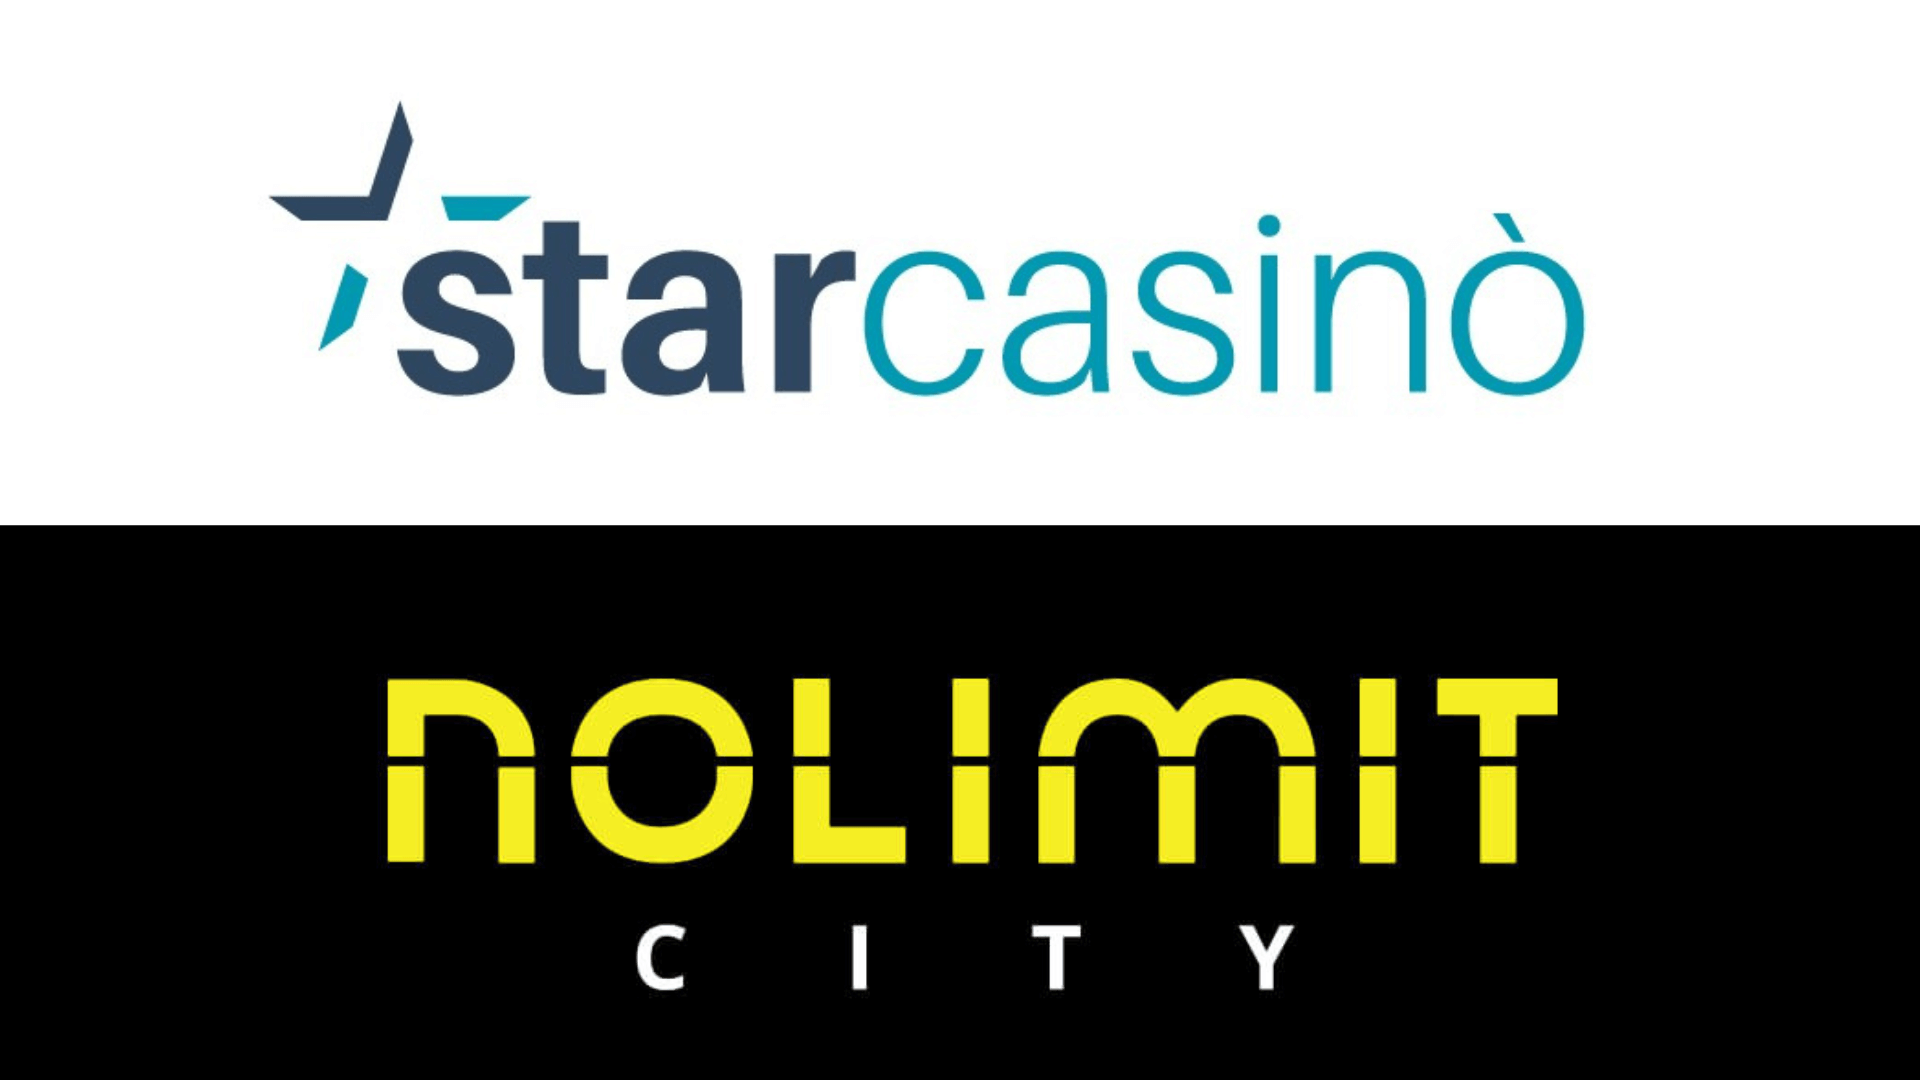 Kota Nolimit meledak ke StarCasino: jumlah slot penyedia naik menjadi 50, semuanya atas nama fungsi elektrifikasinya